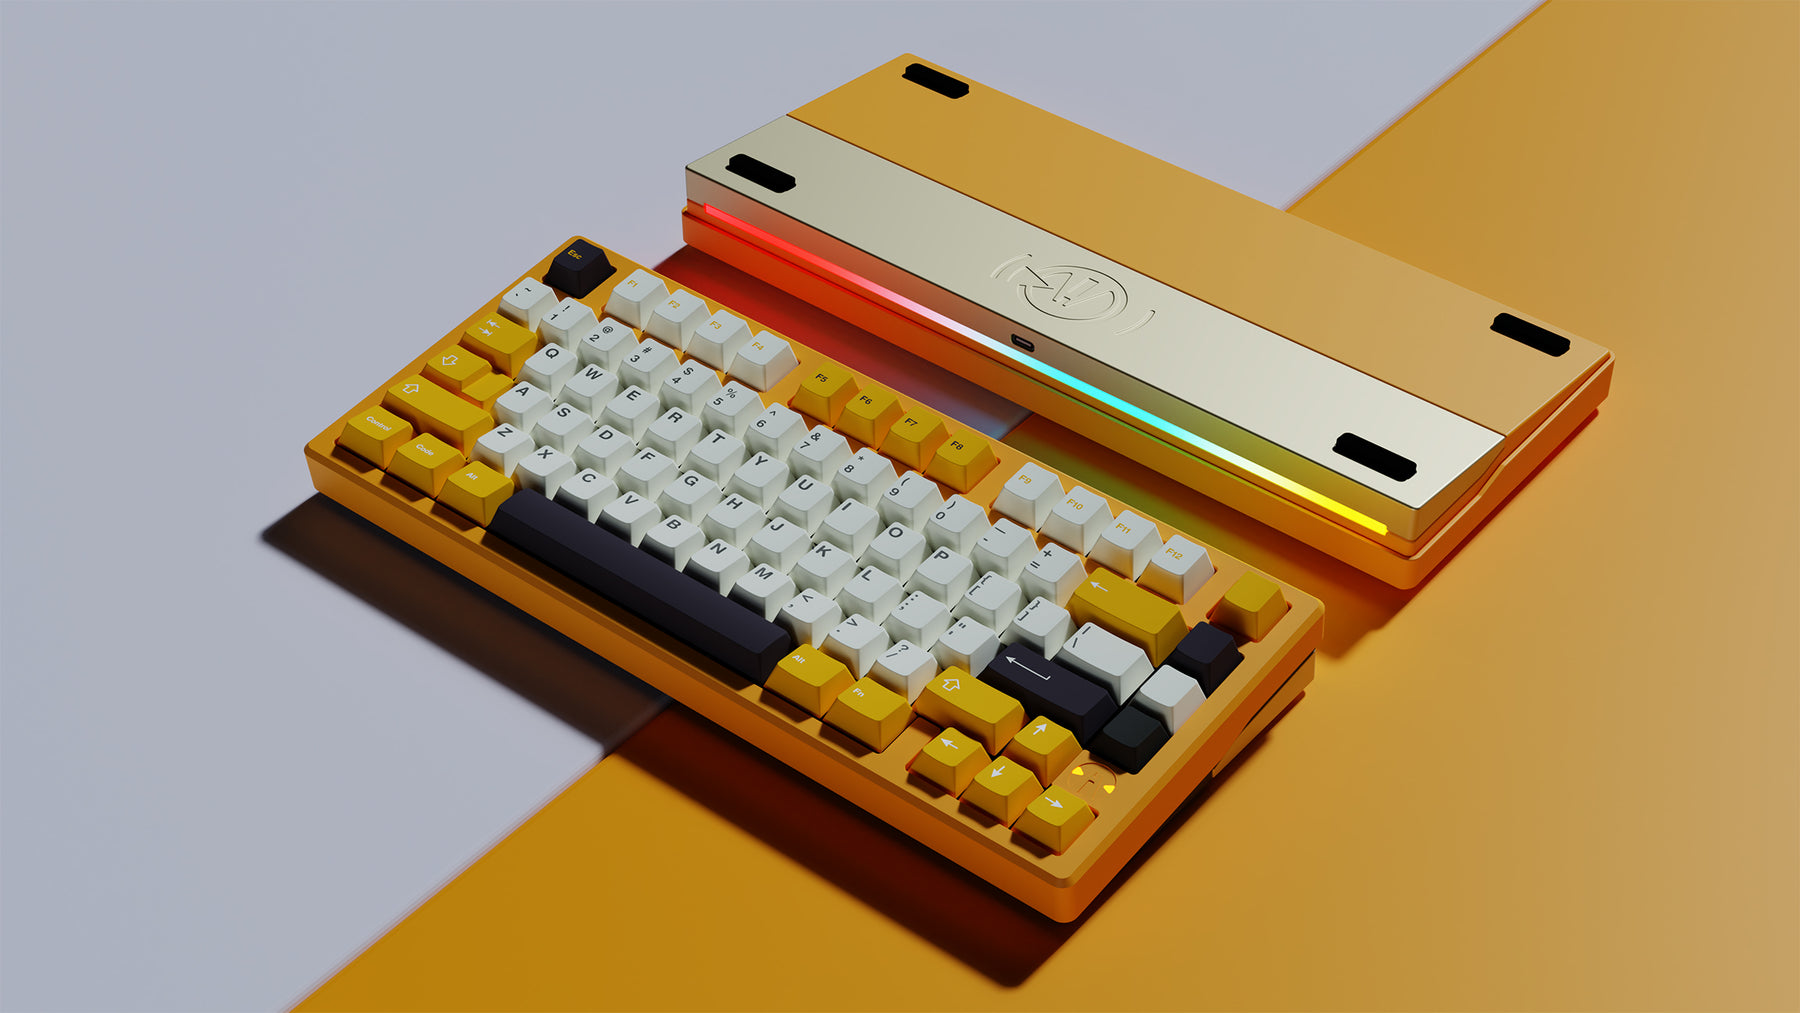 [GB] Hope75 S Keyboard Kit